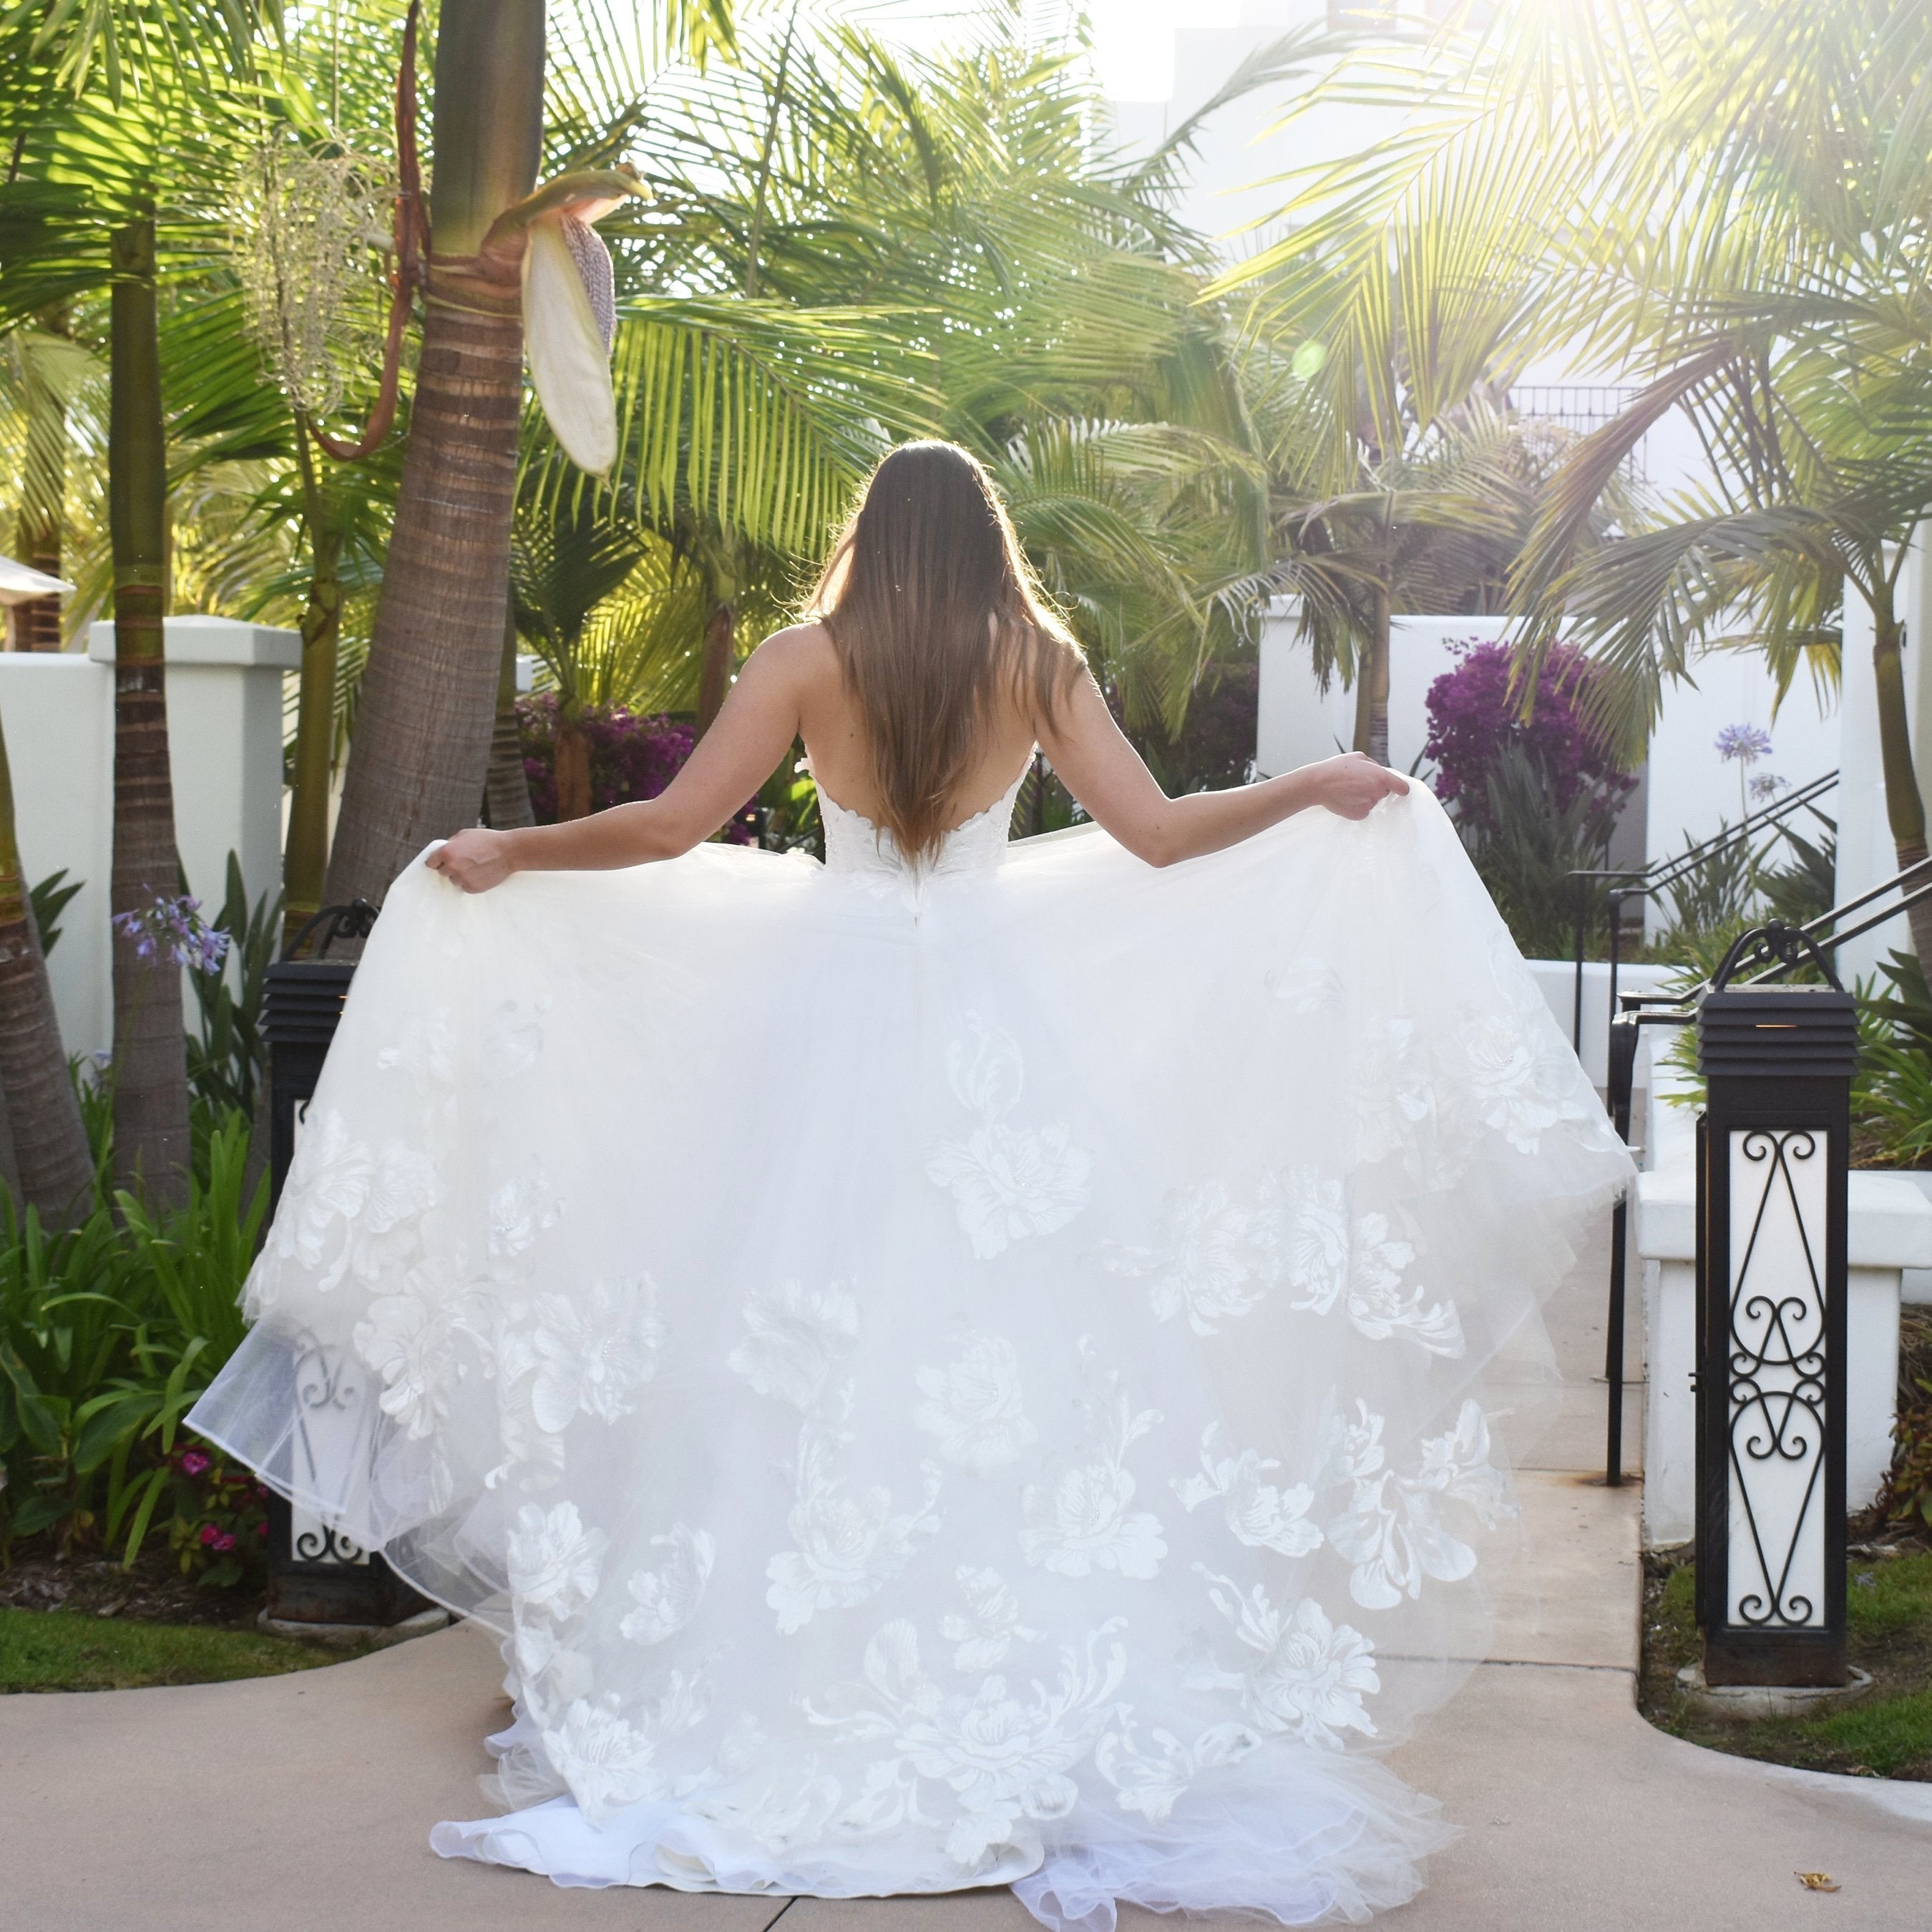 Rene atelier belle bridal gown